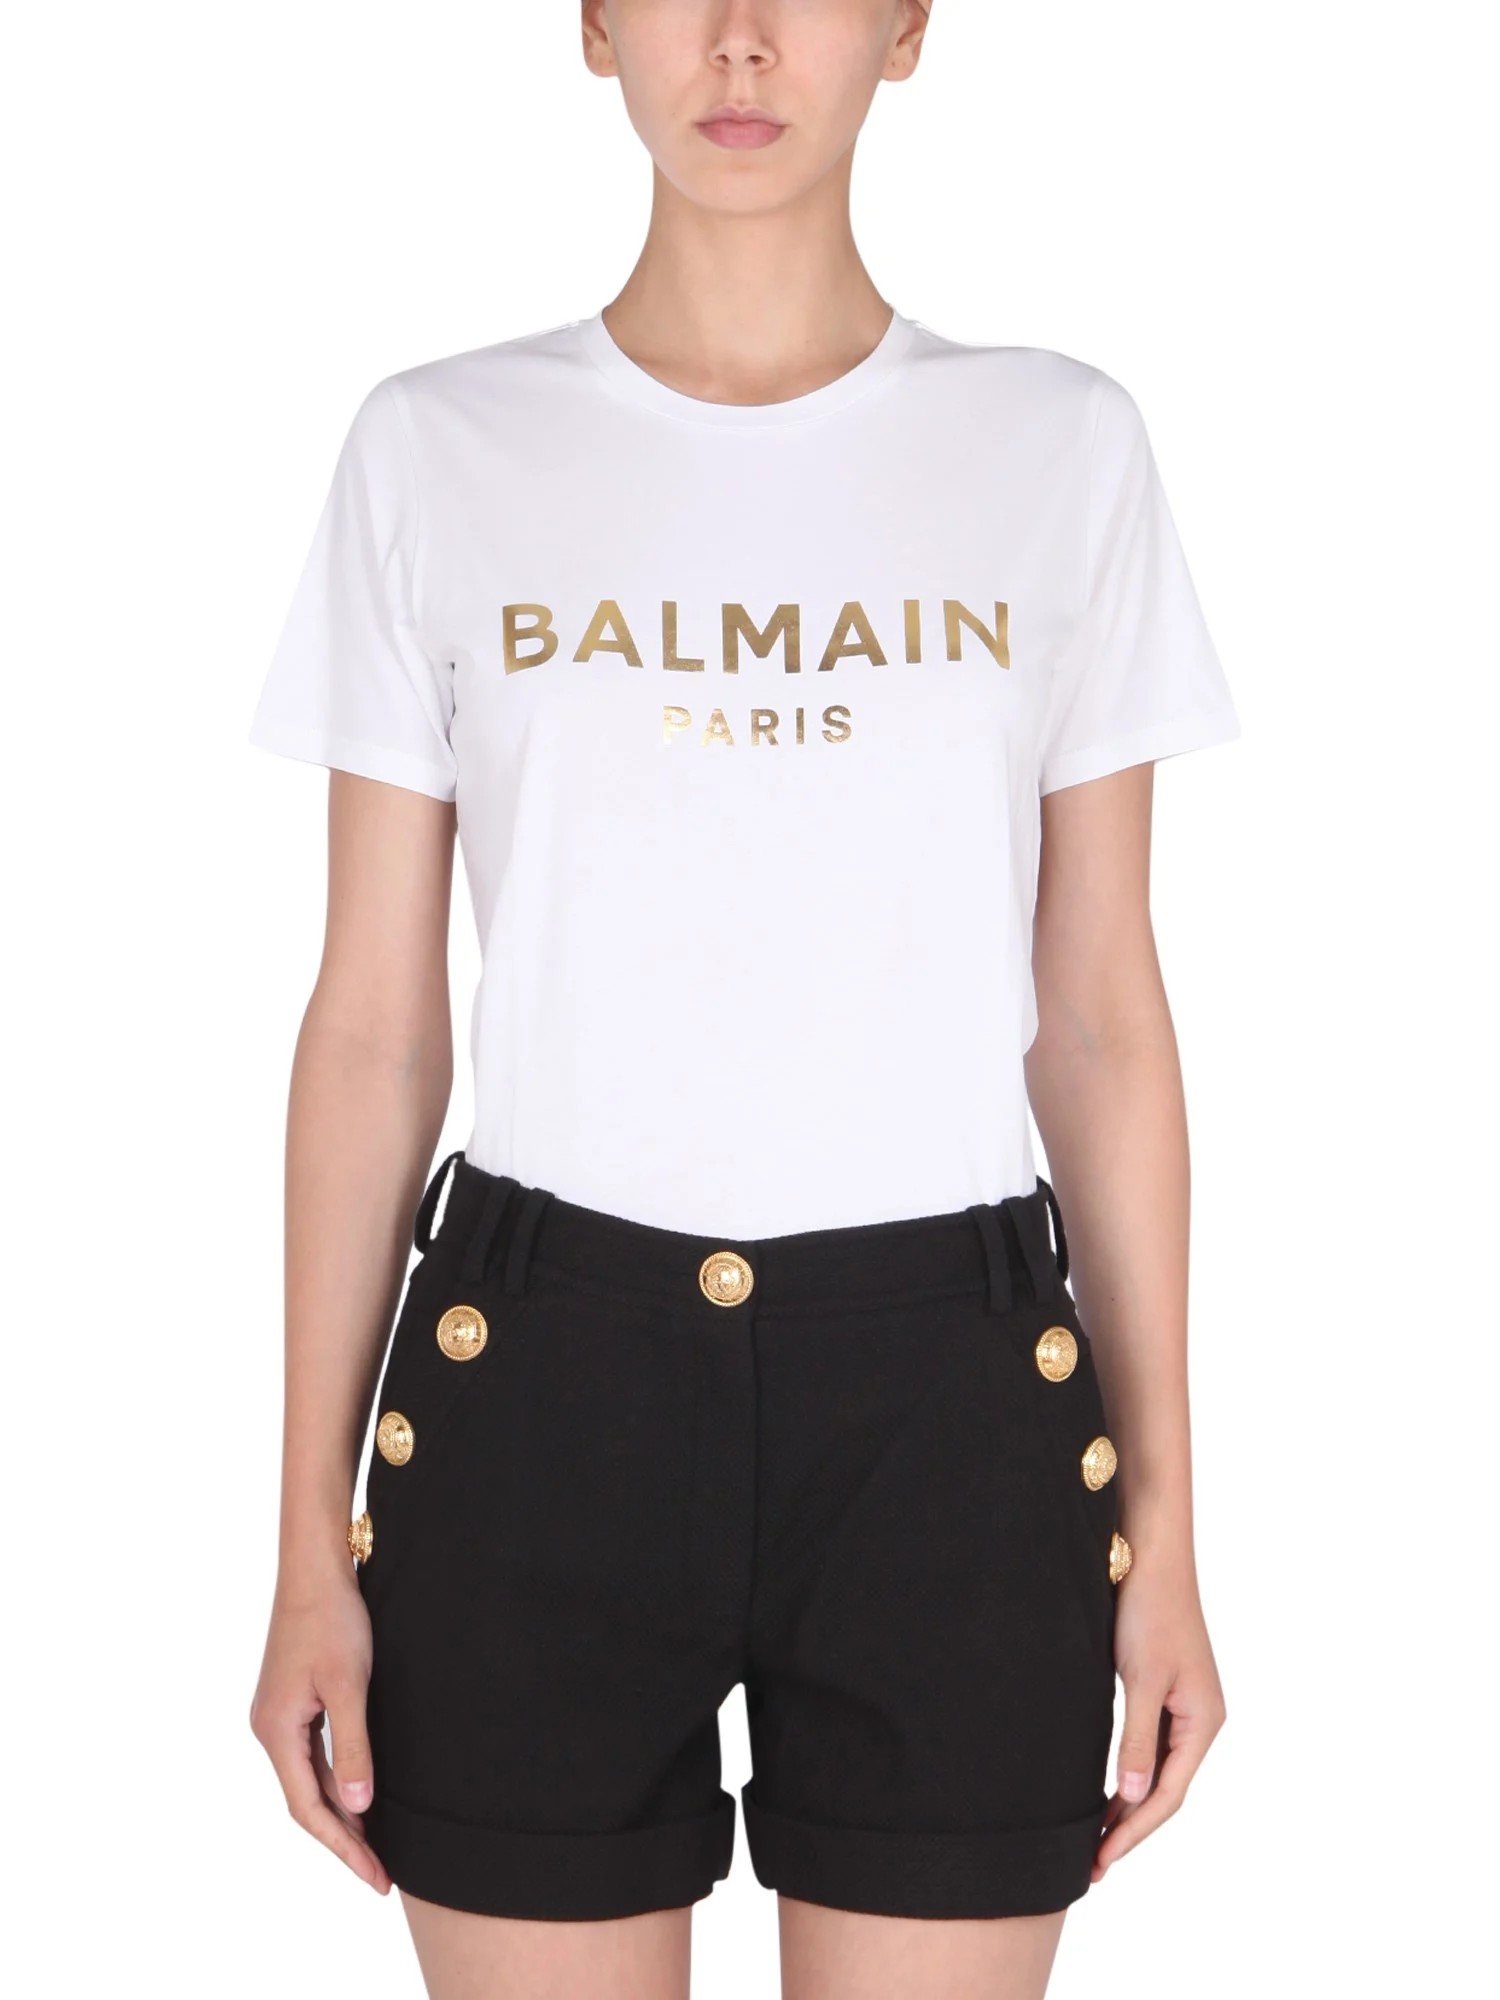 BALMAIN Women Balmain Paris Metallic Logo T-Shirt in White/Gold 4